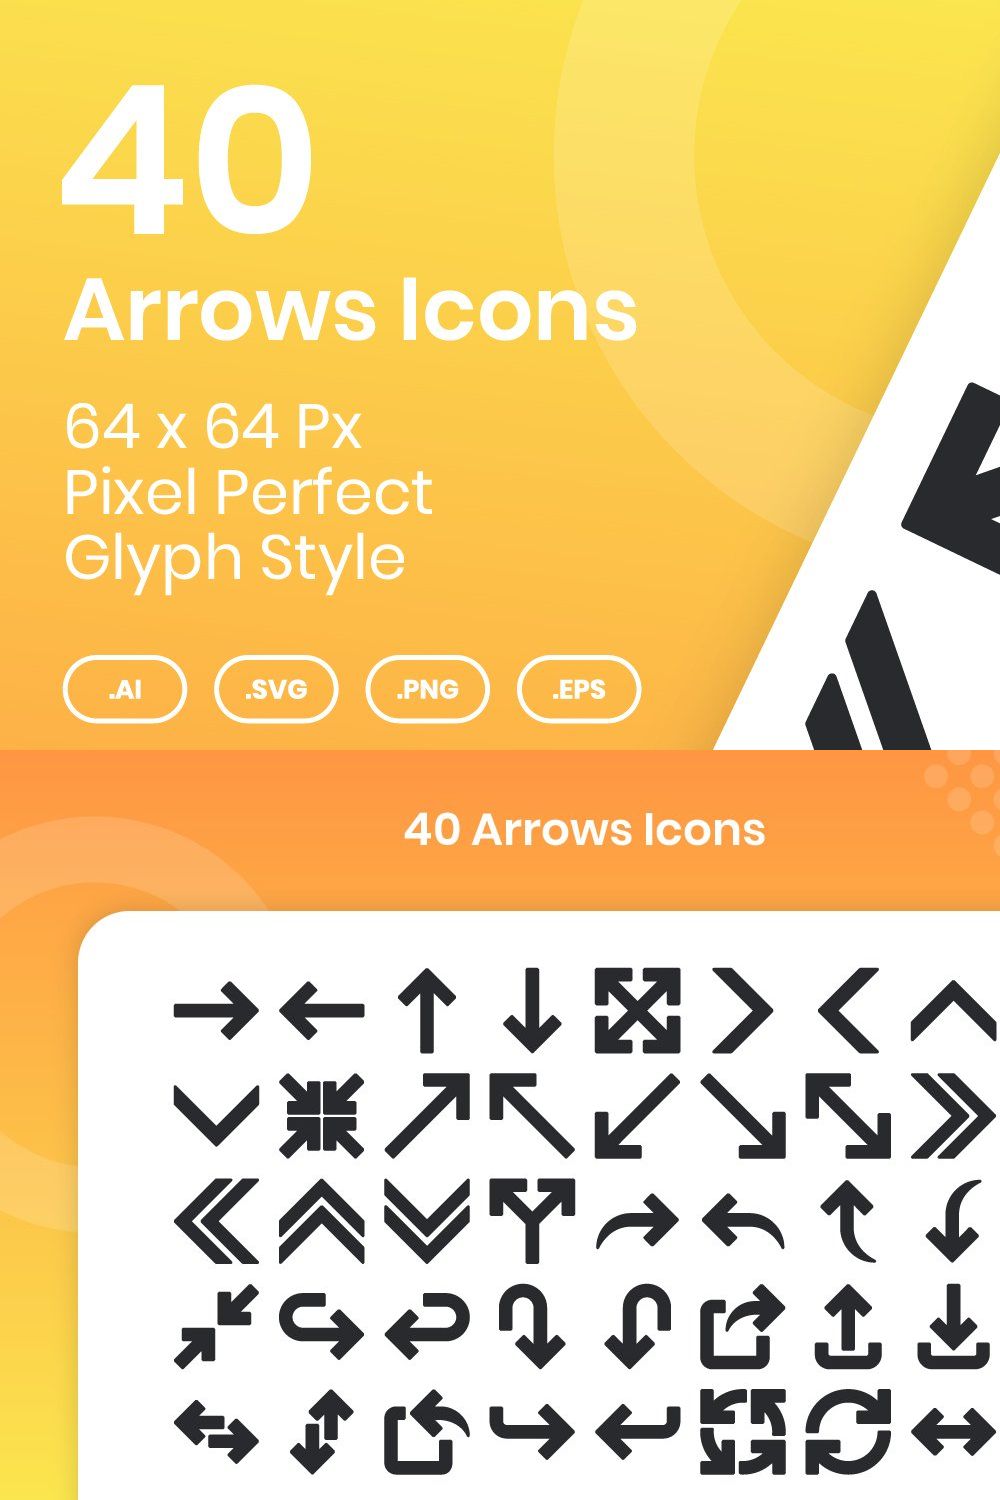 40 Arrows - Glyph pinterest preview image.